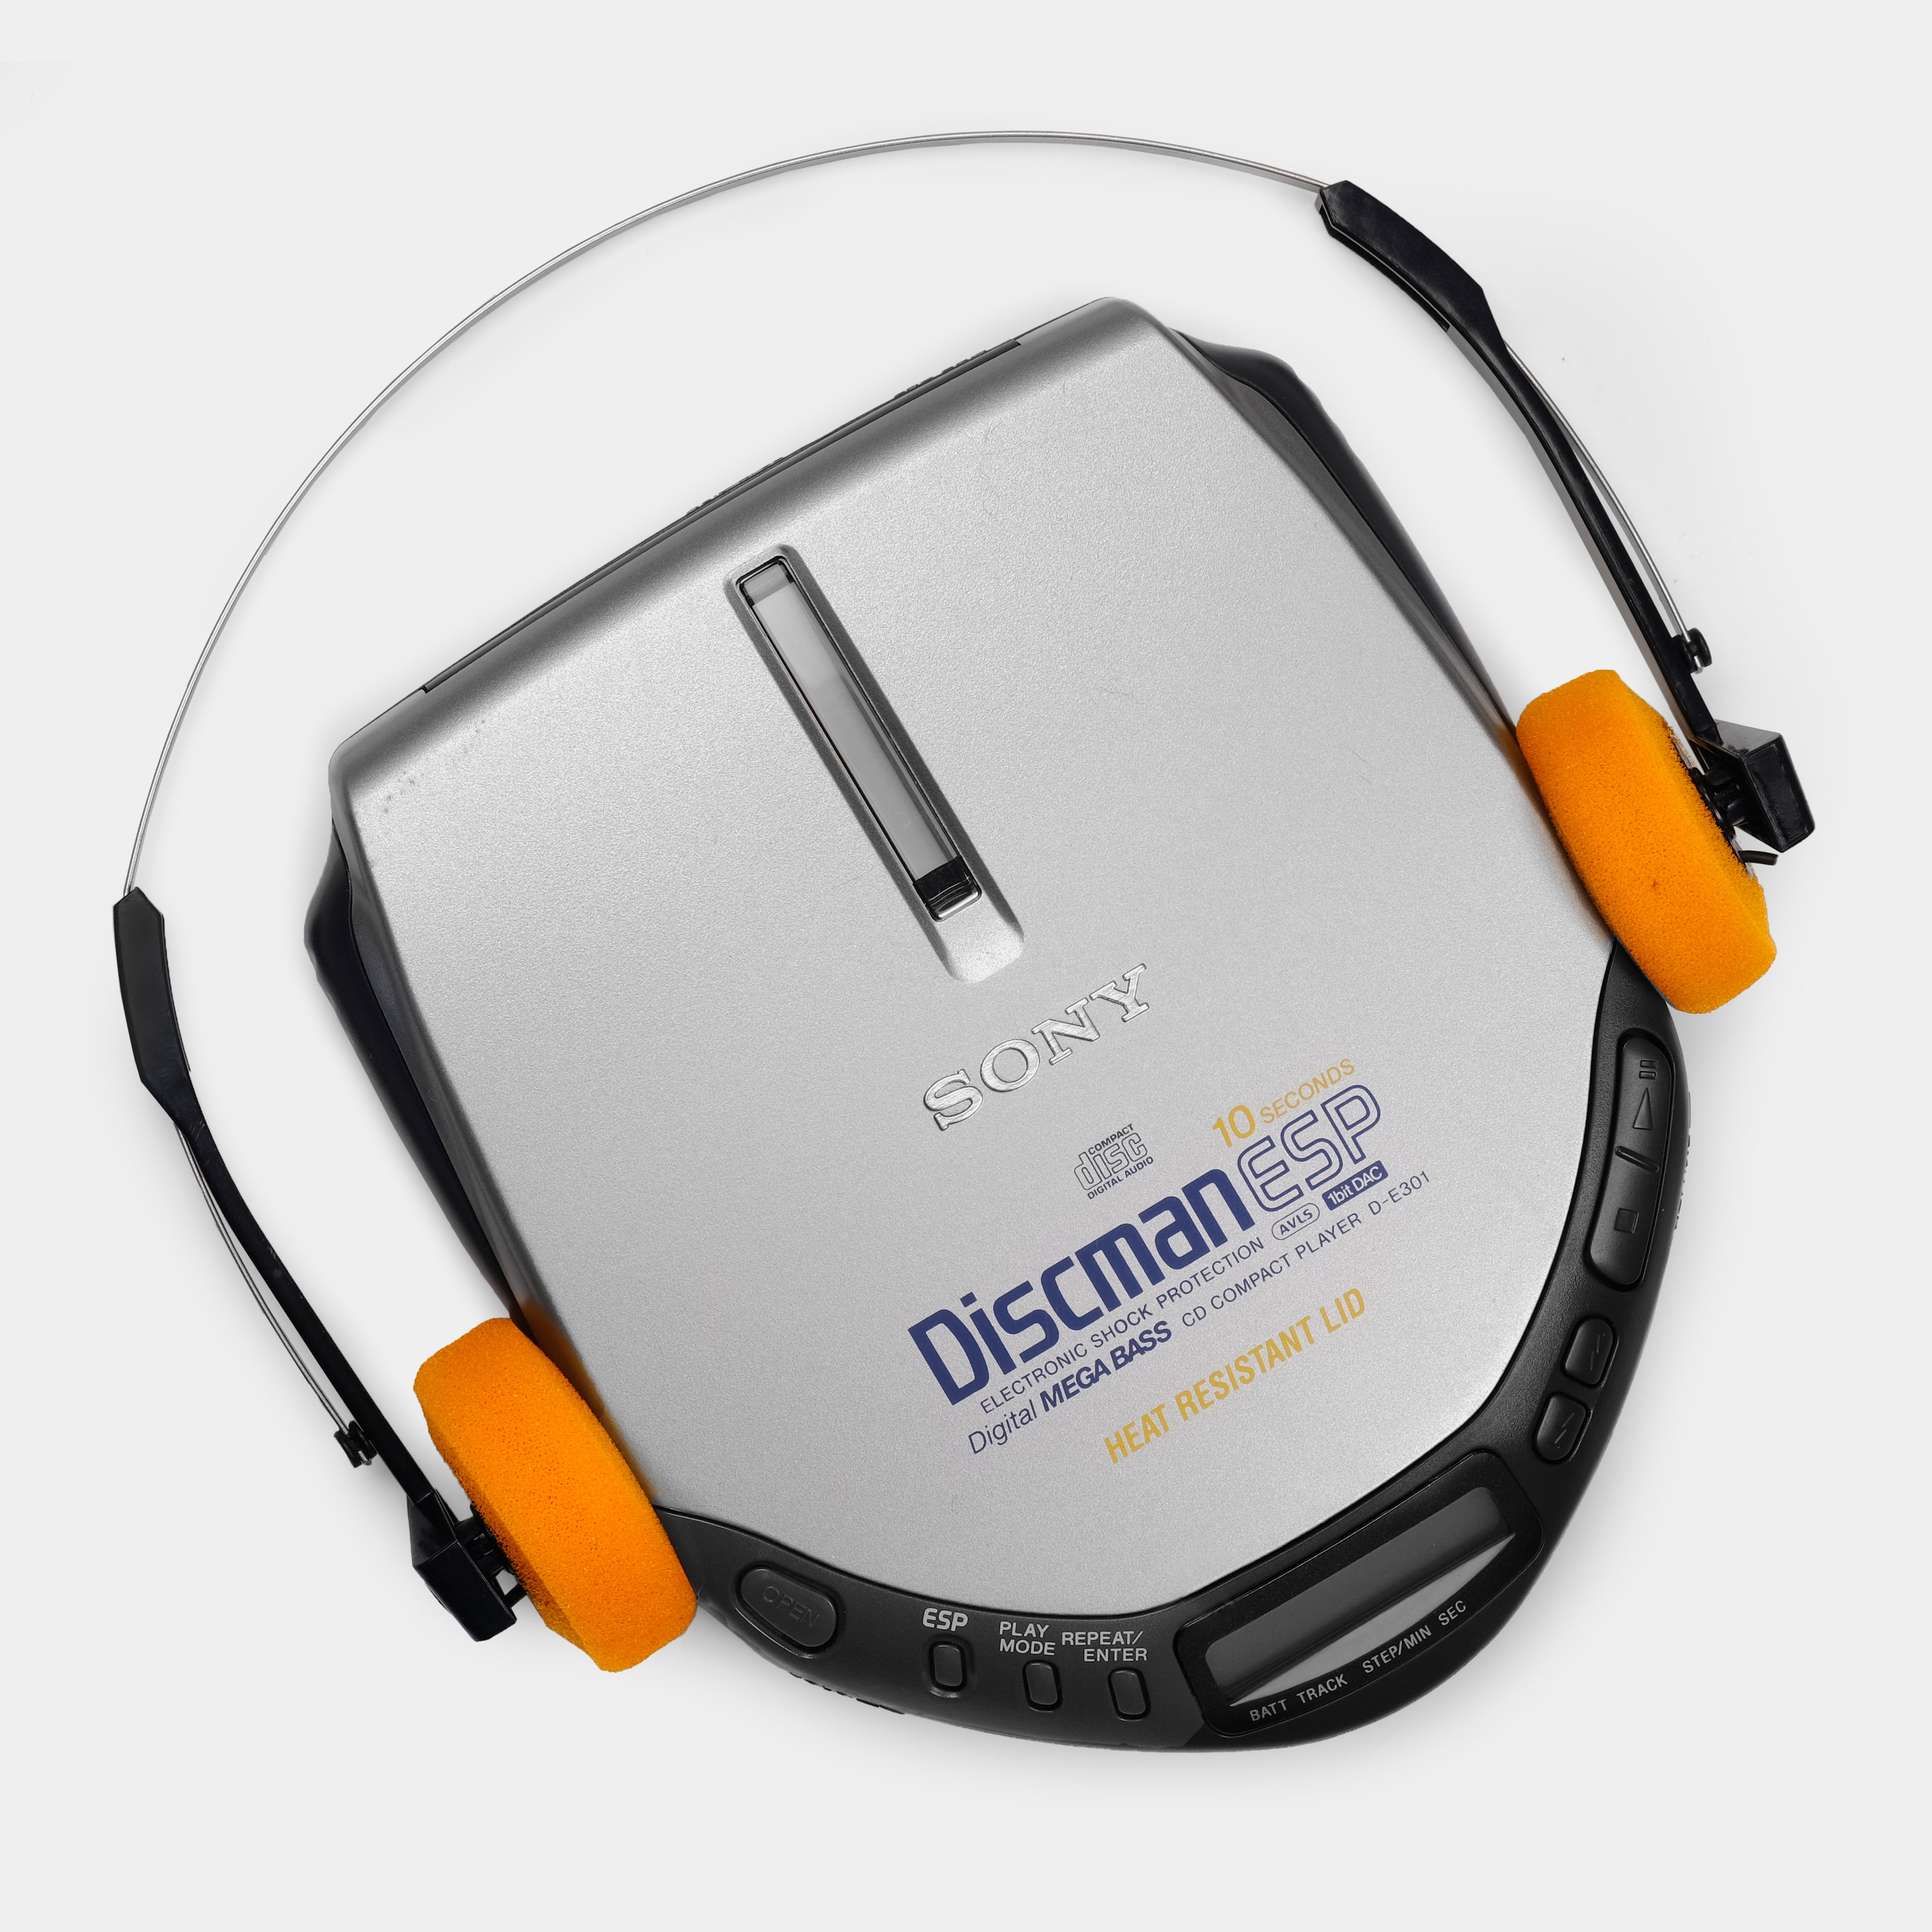 Sony D-E301 Portable CD Player